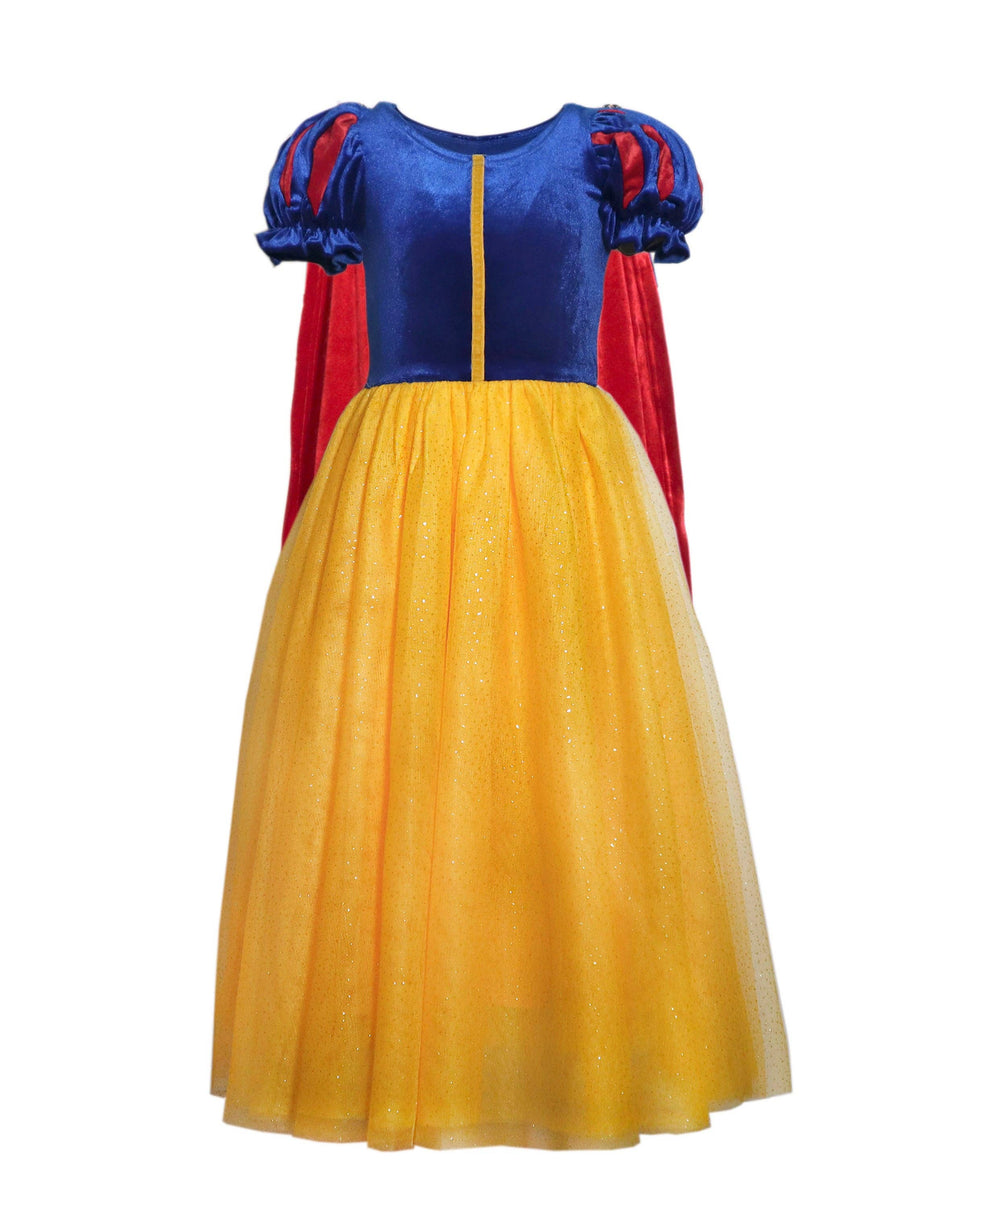 Fairest Princess costume dress